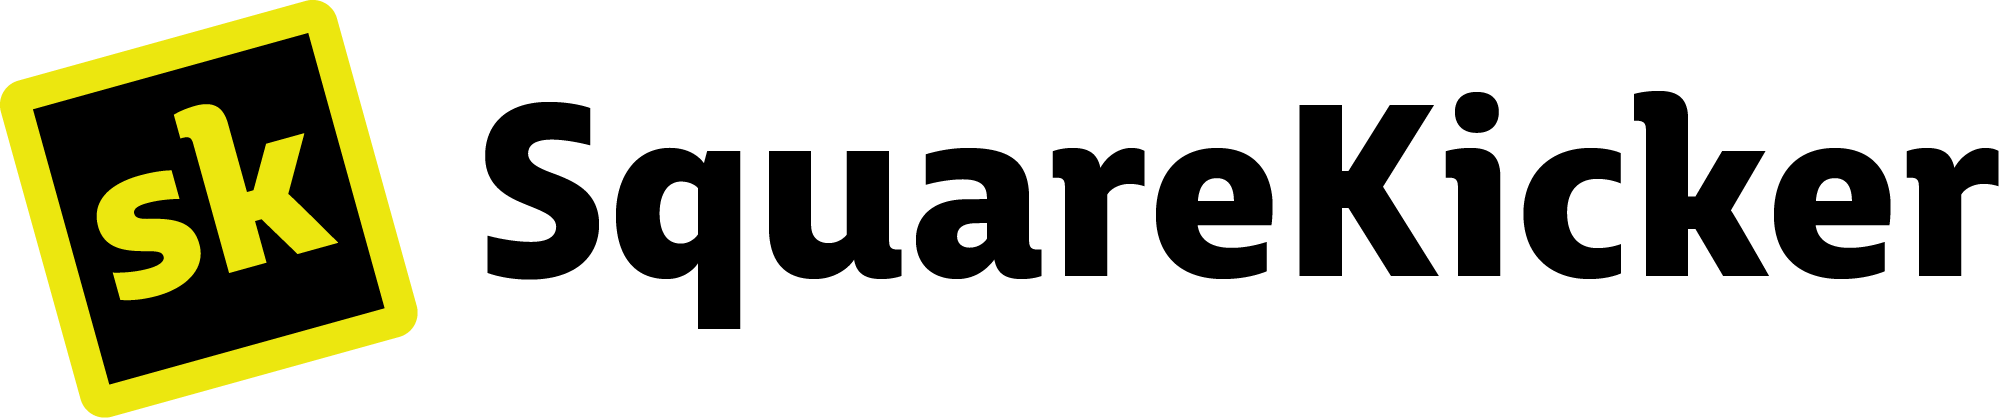 Squarekicker logo black.png